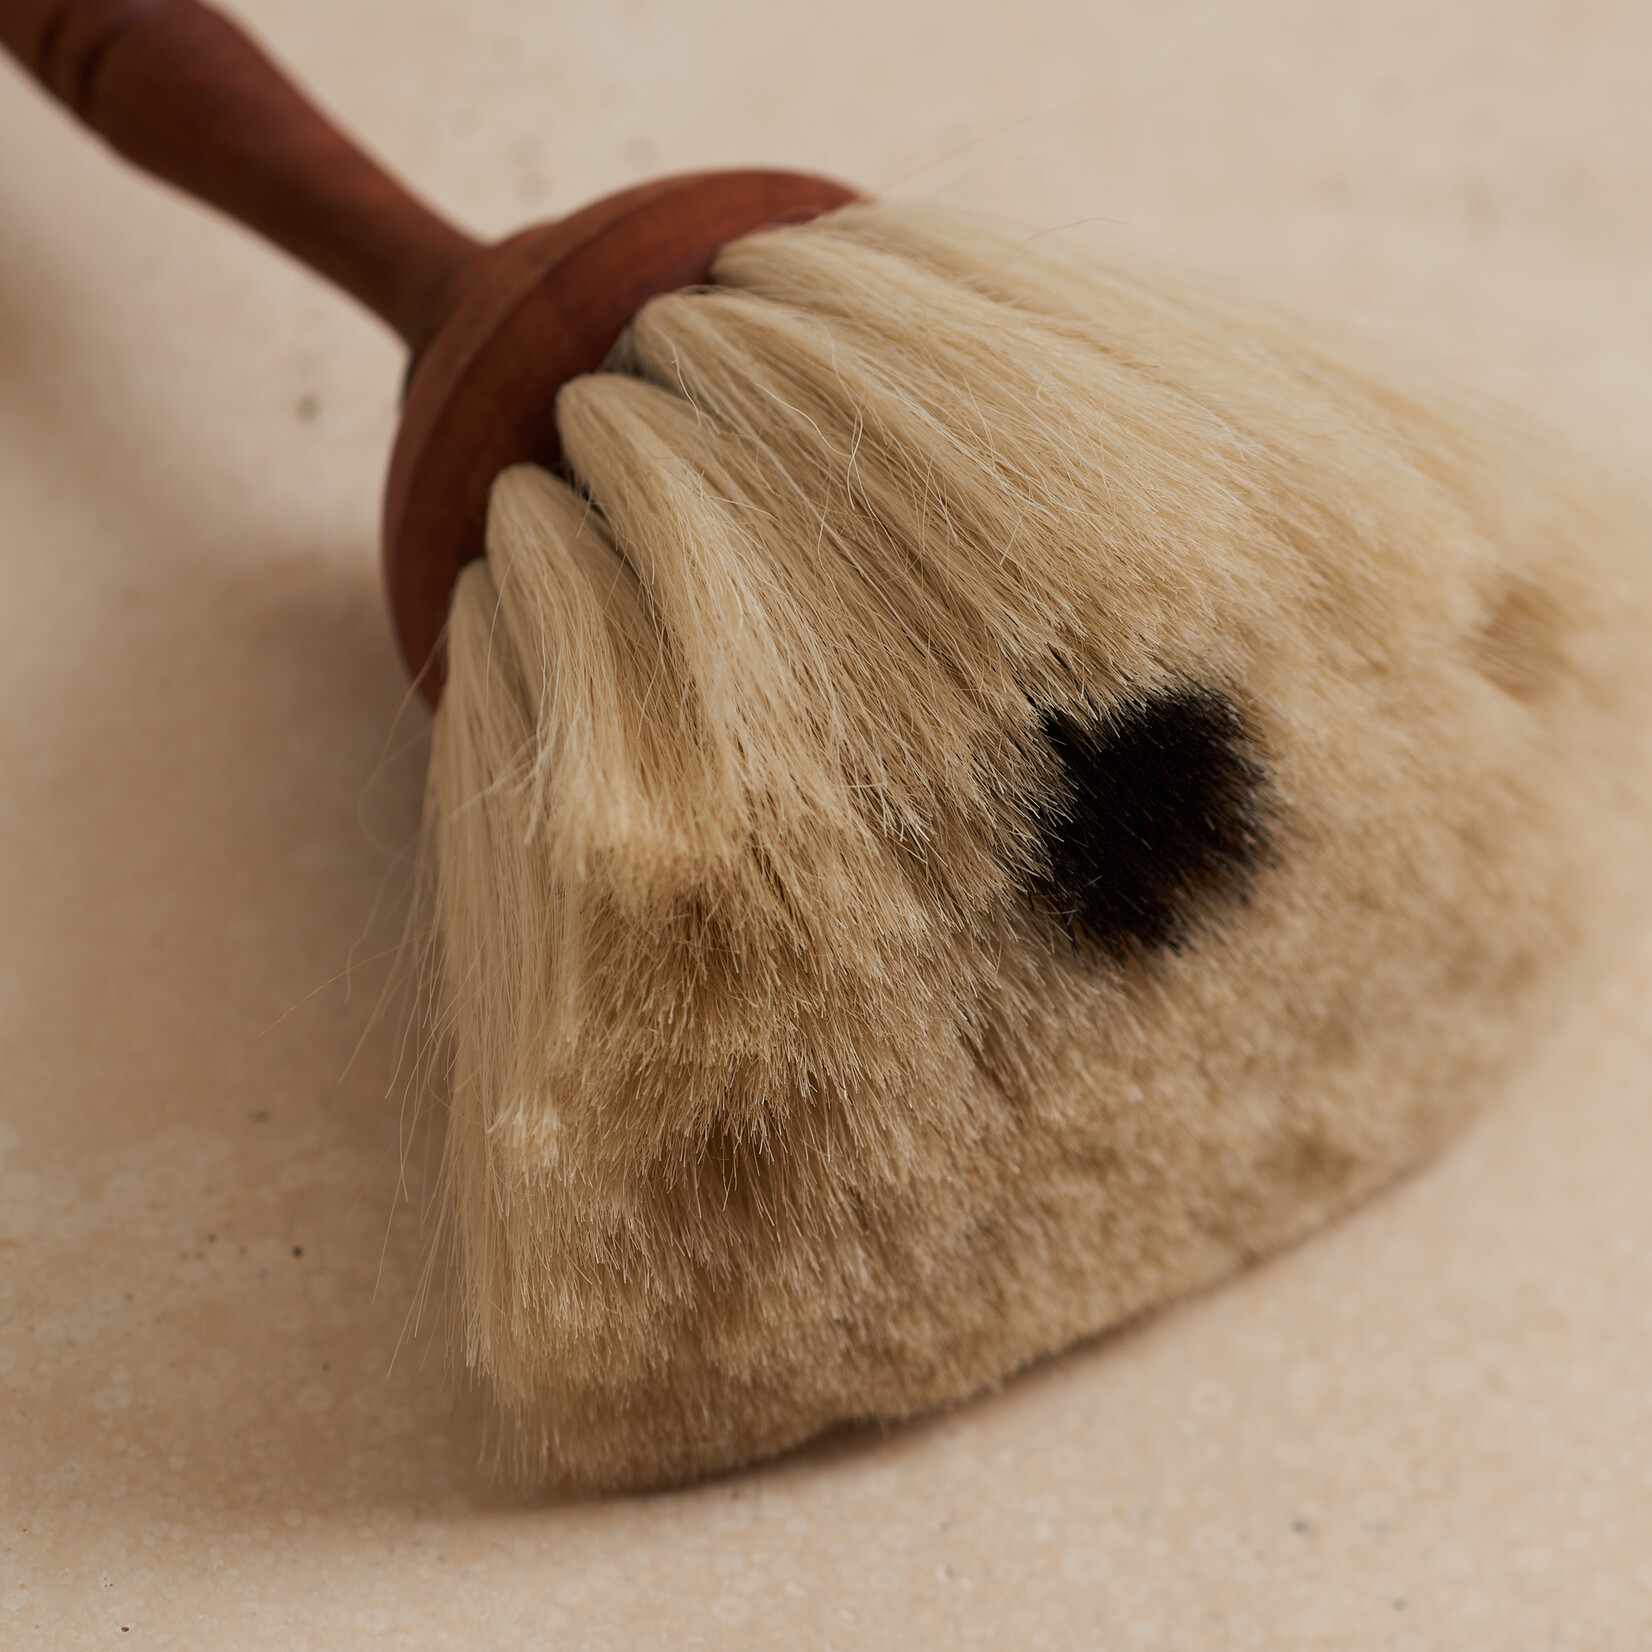 Pearwood Handled Dust Brush - white goat hair